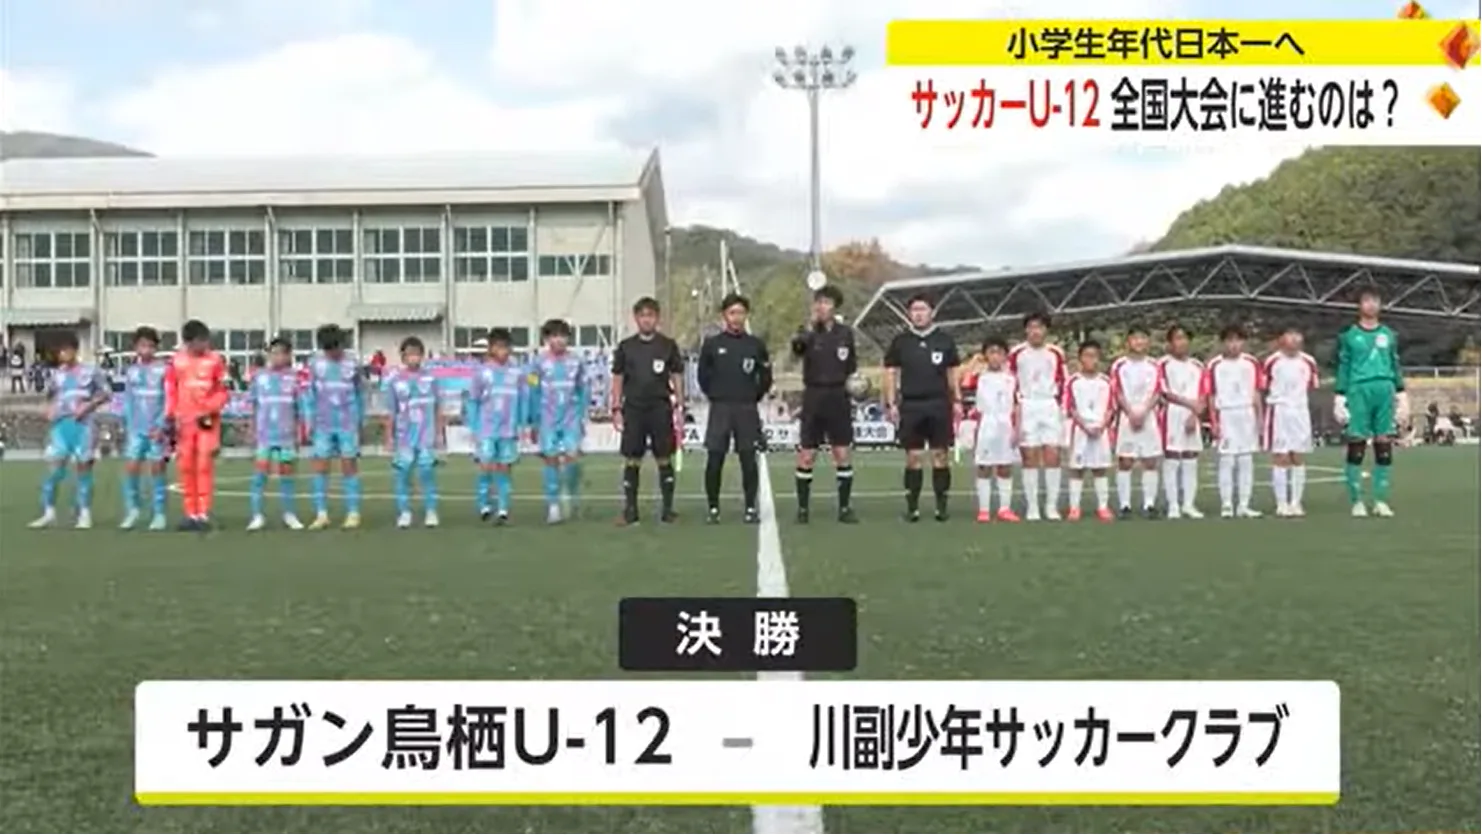 U-12 サッカー選手権佐賀県大会 サガンユースが全国へ 決勝で川副下す